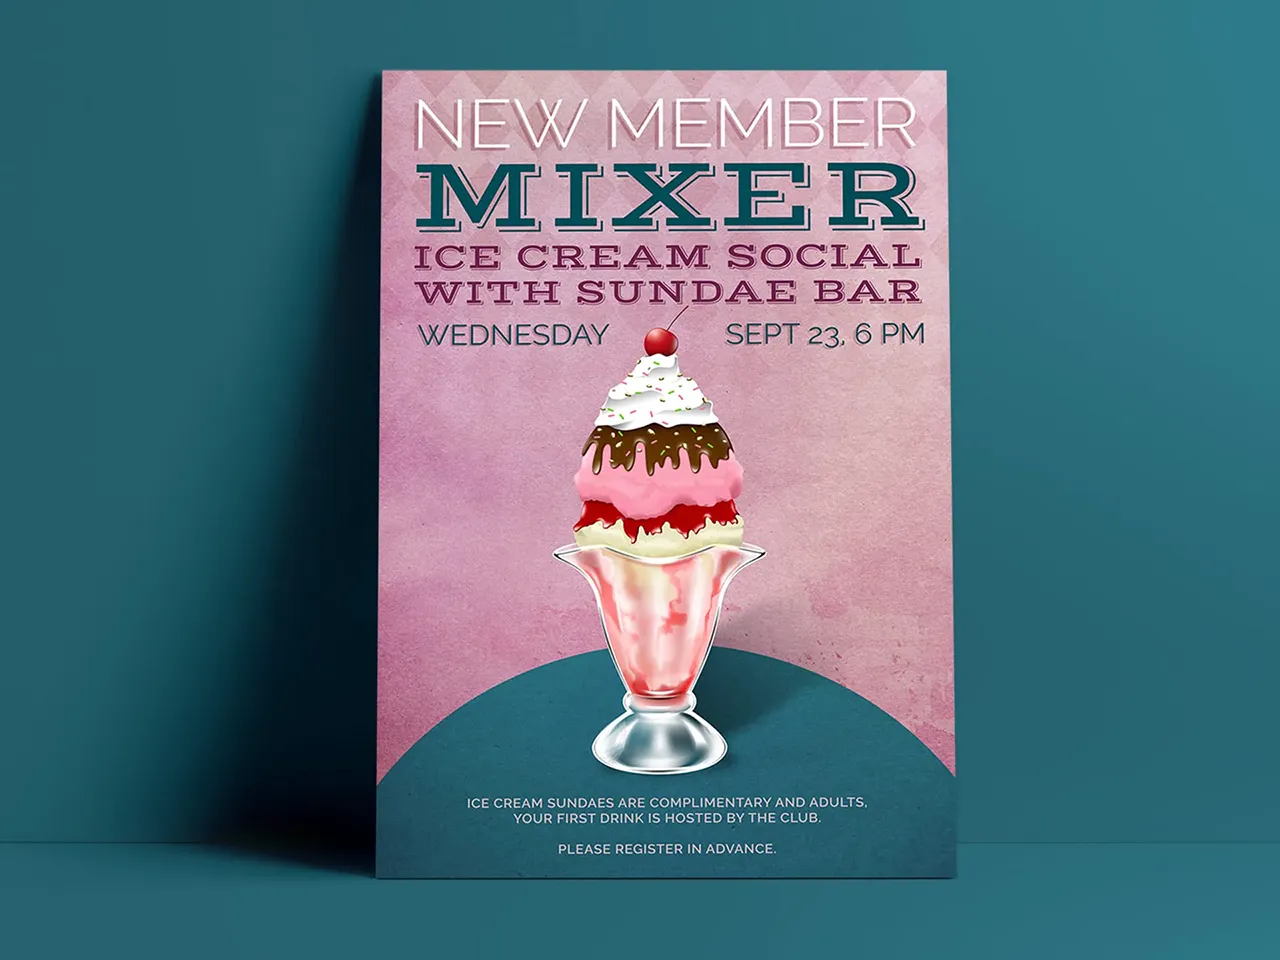 New Member Mixer Ice Cream Social promotional flyer